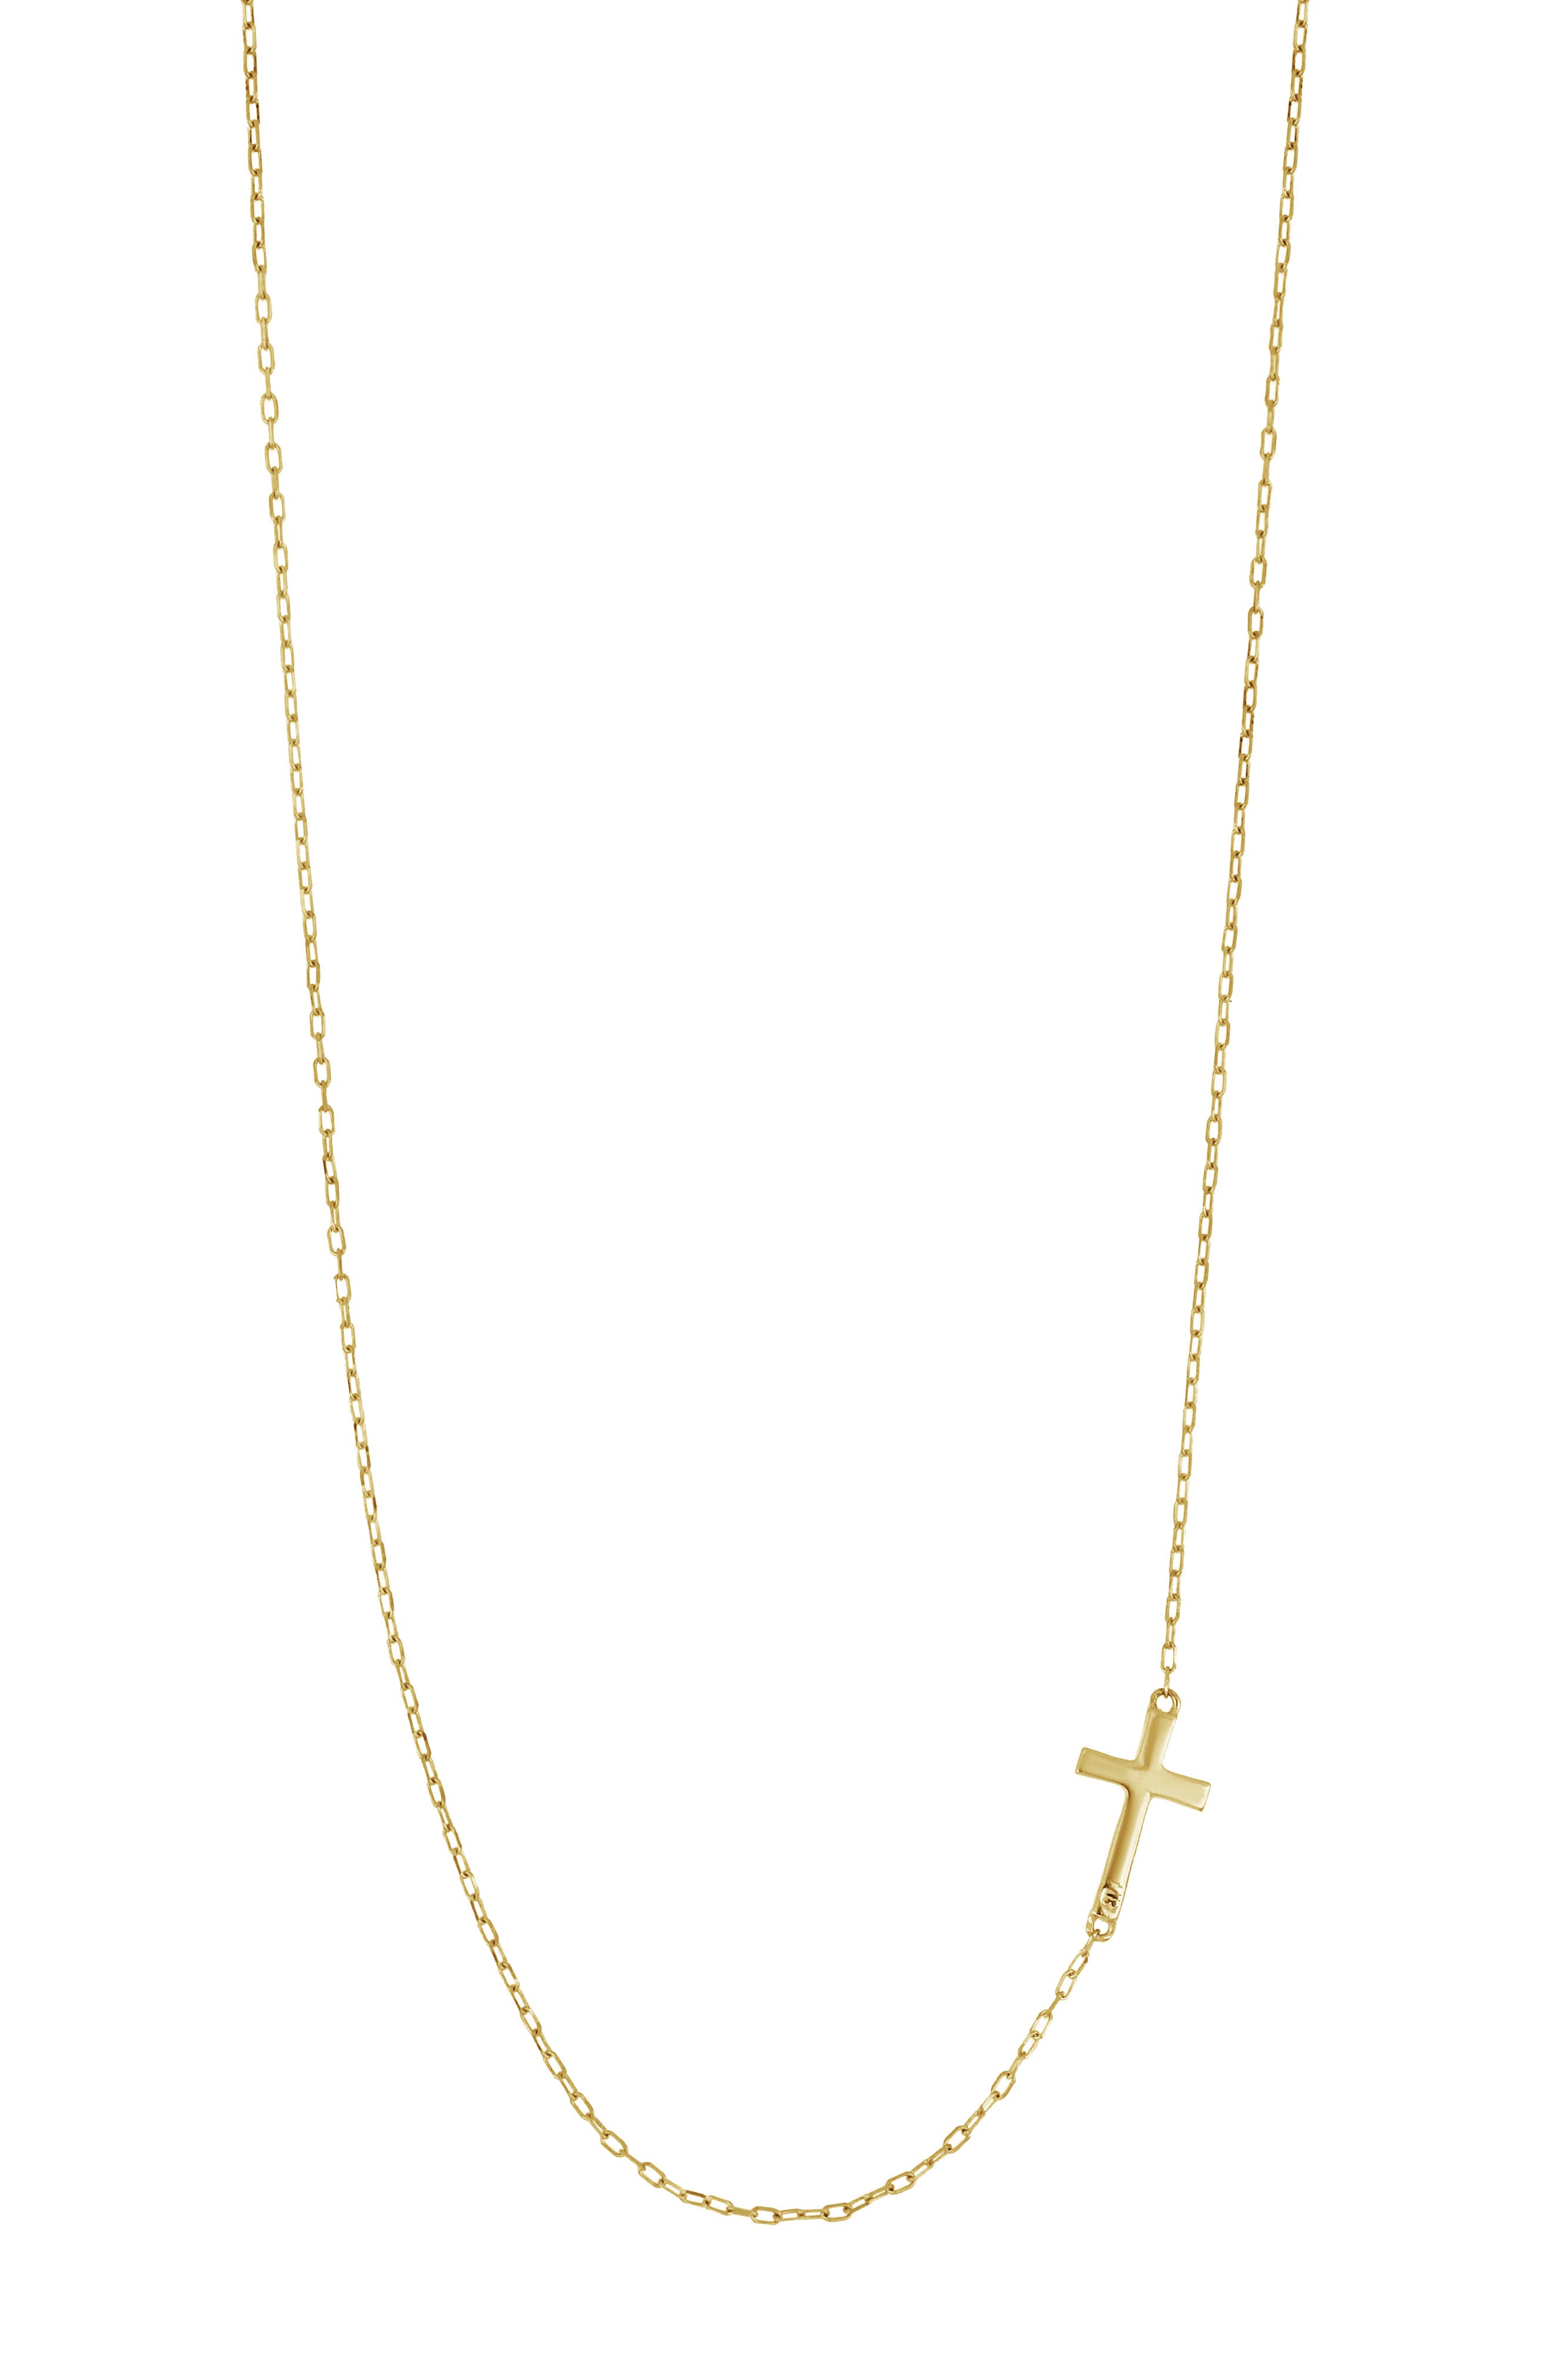 $18 Nordstrom Blue/Green Verdigris Brasstone Chains Triple-strand Cross Necklace 